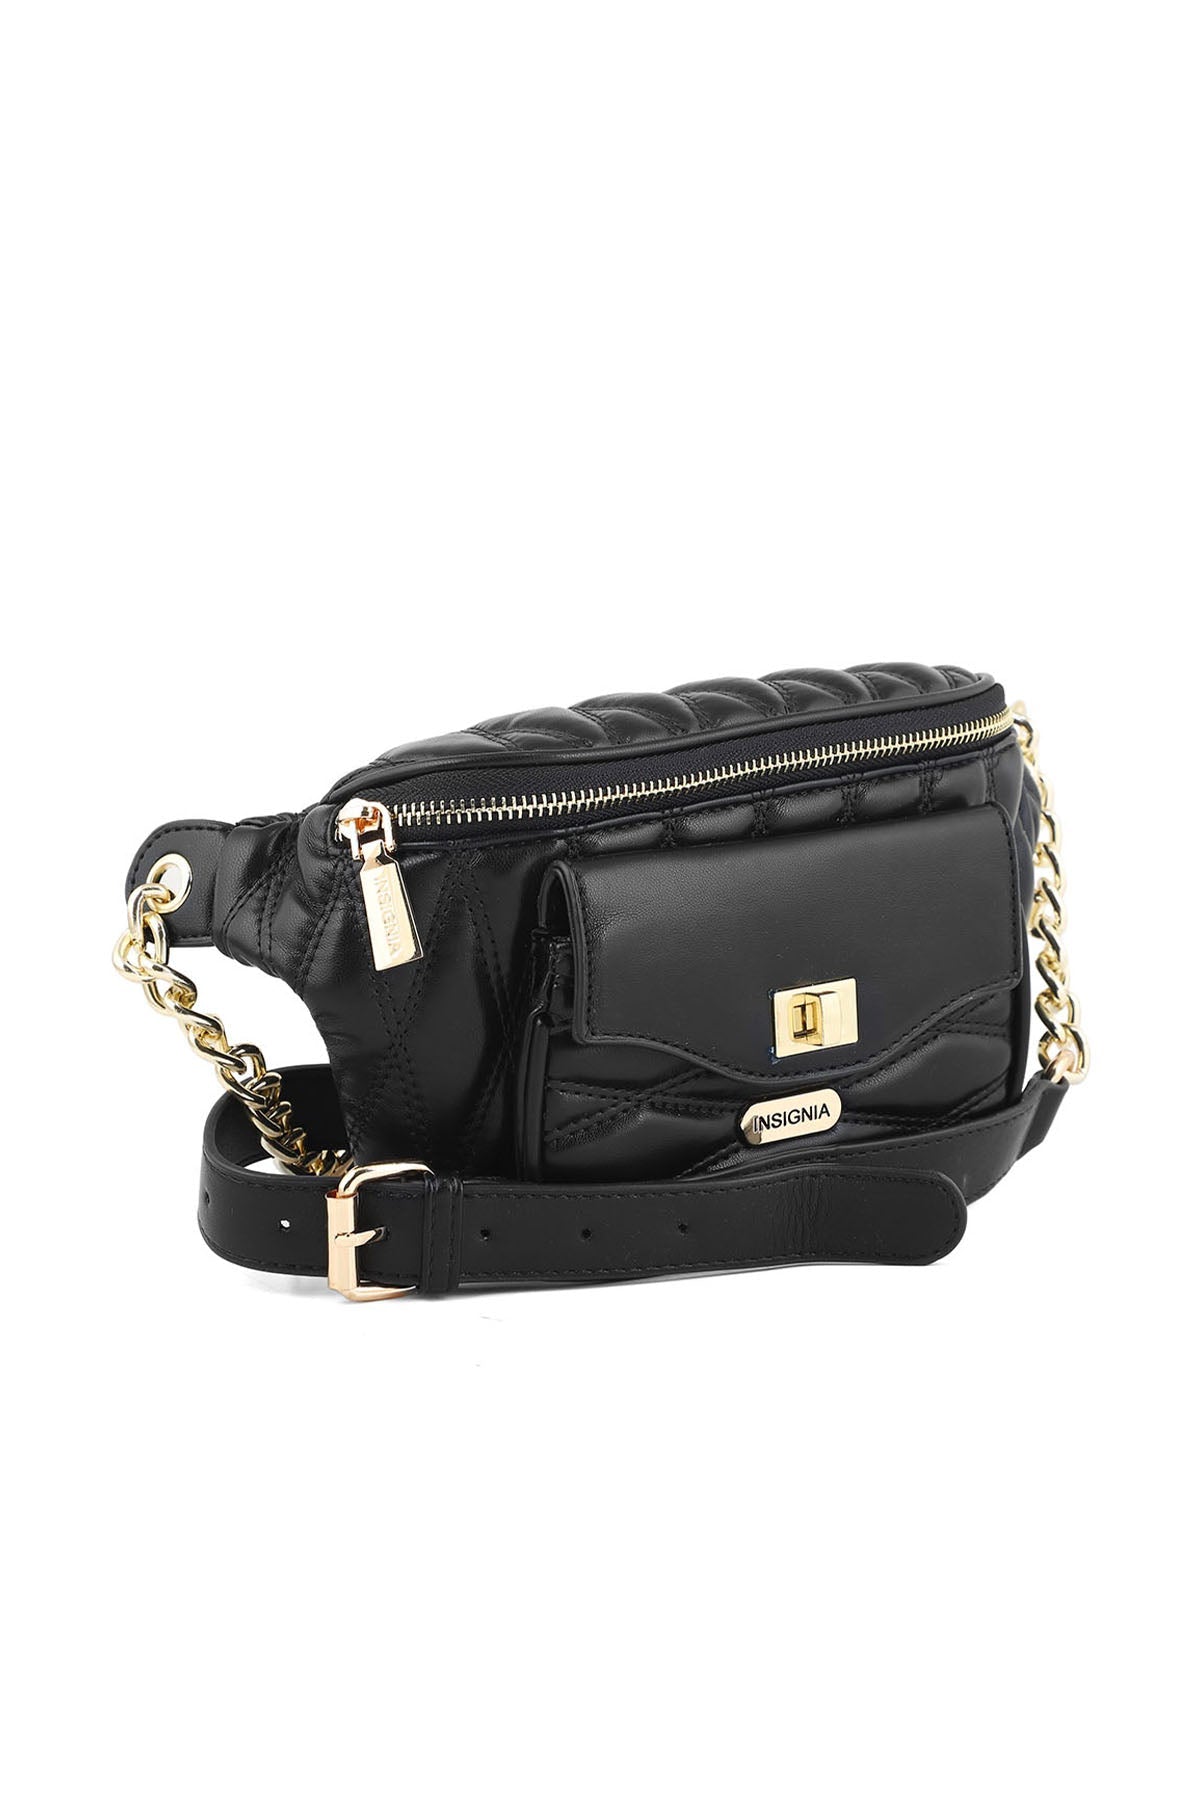 Feny Shoulder Bags B15059-Black